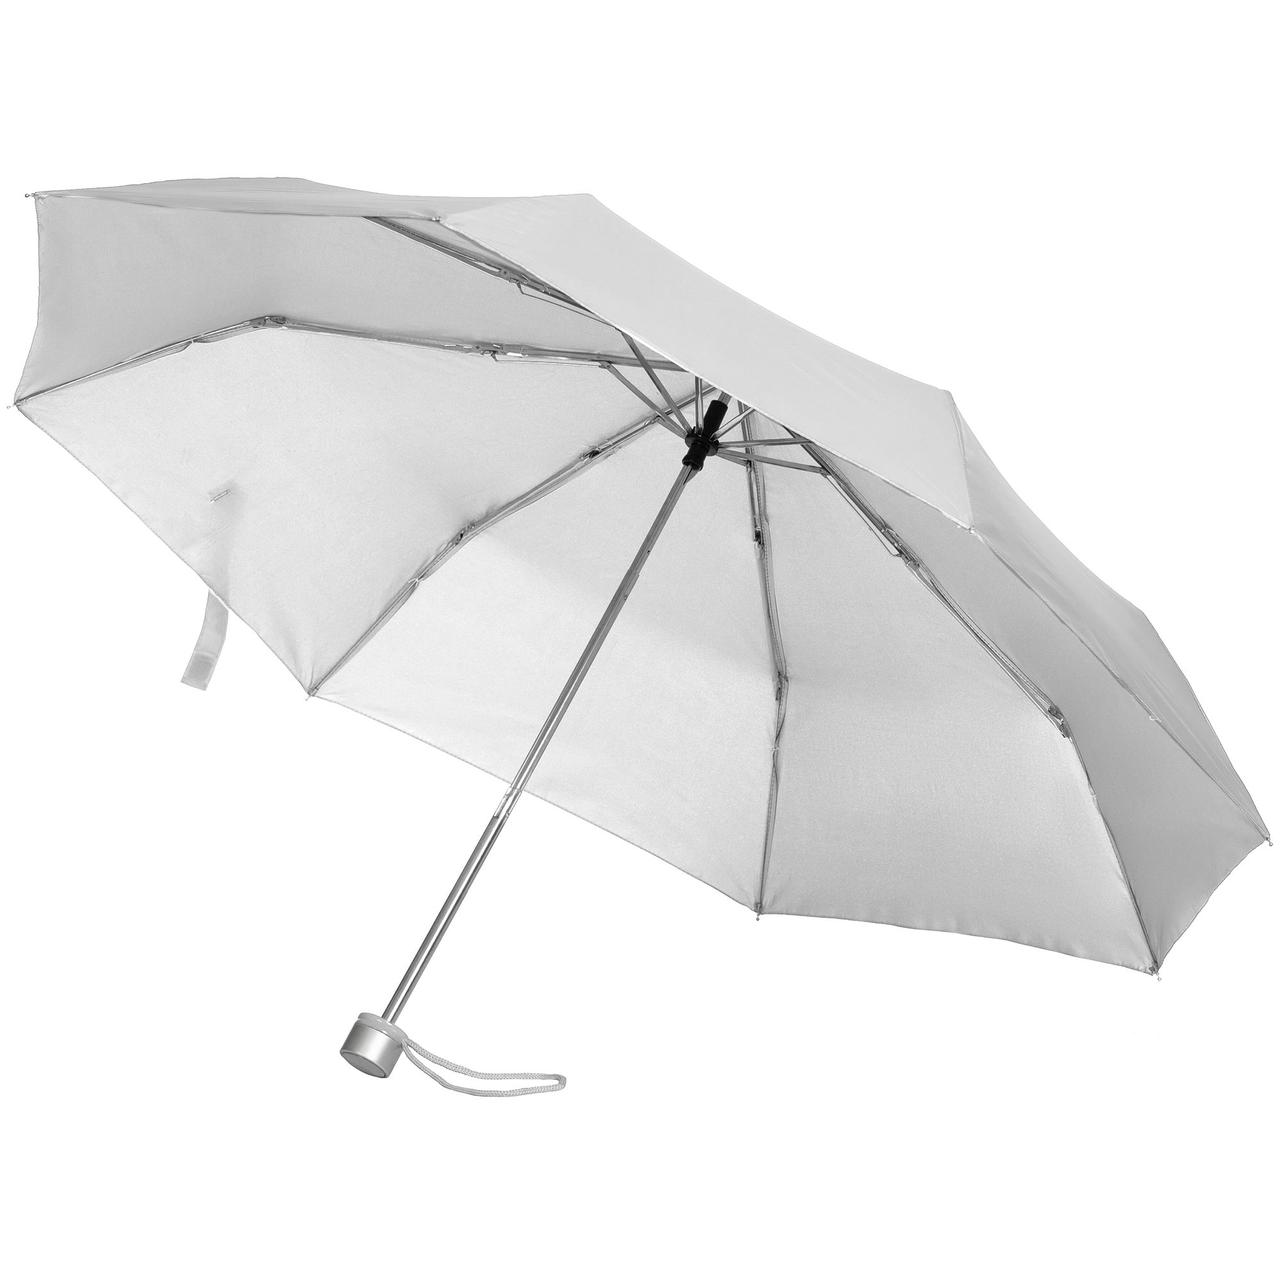 Зонт складной Silverlake, серебристый (артикул 79135.11), фото 1